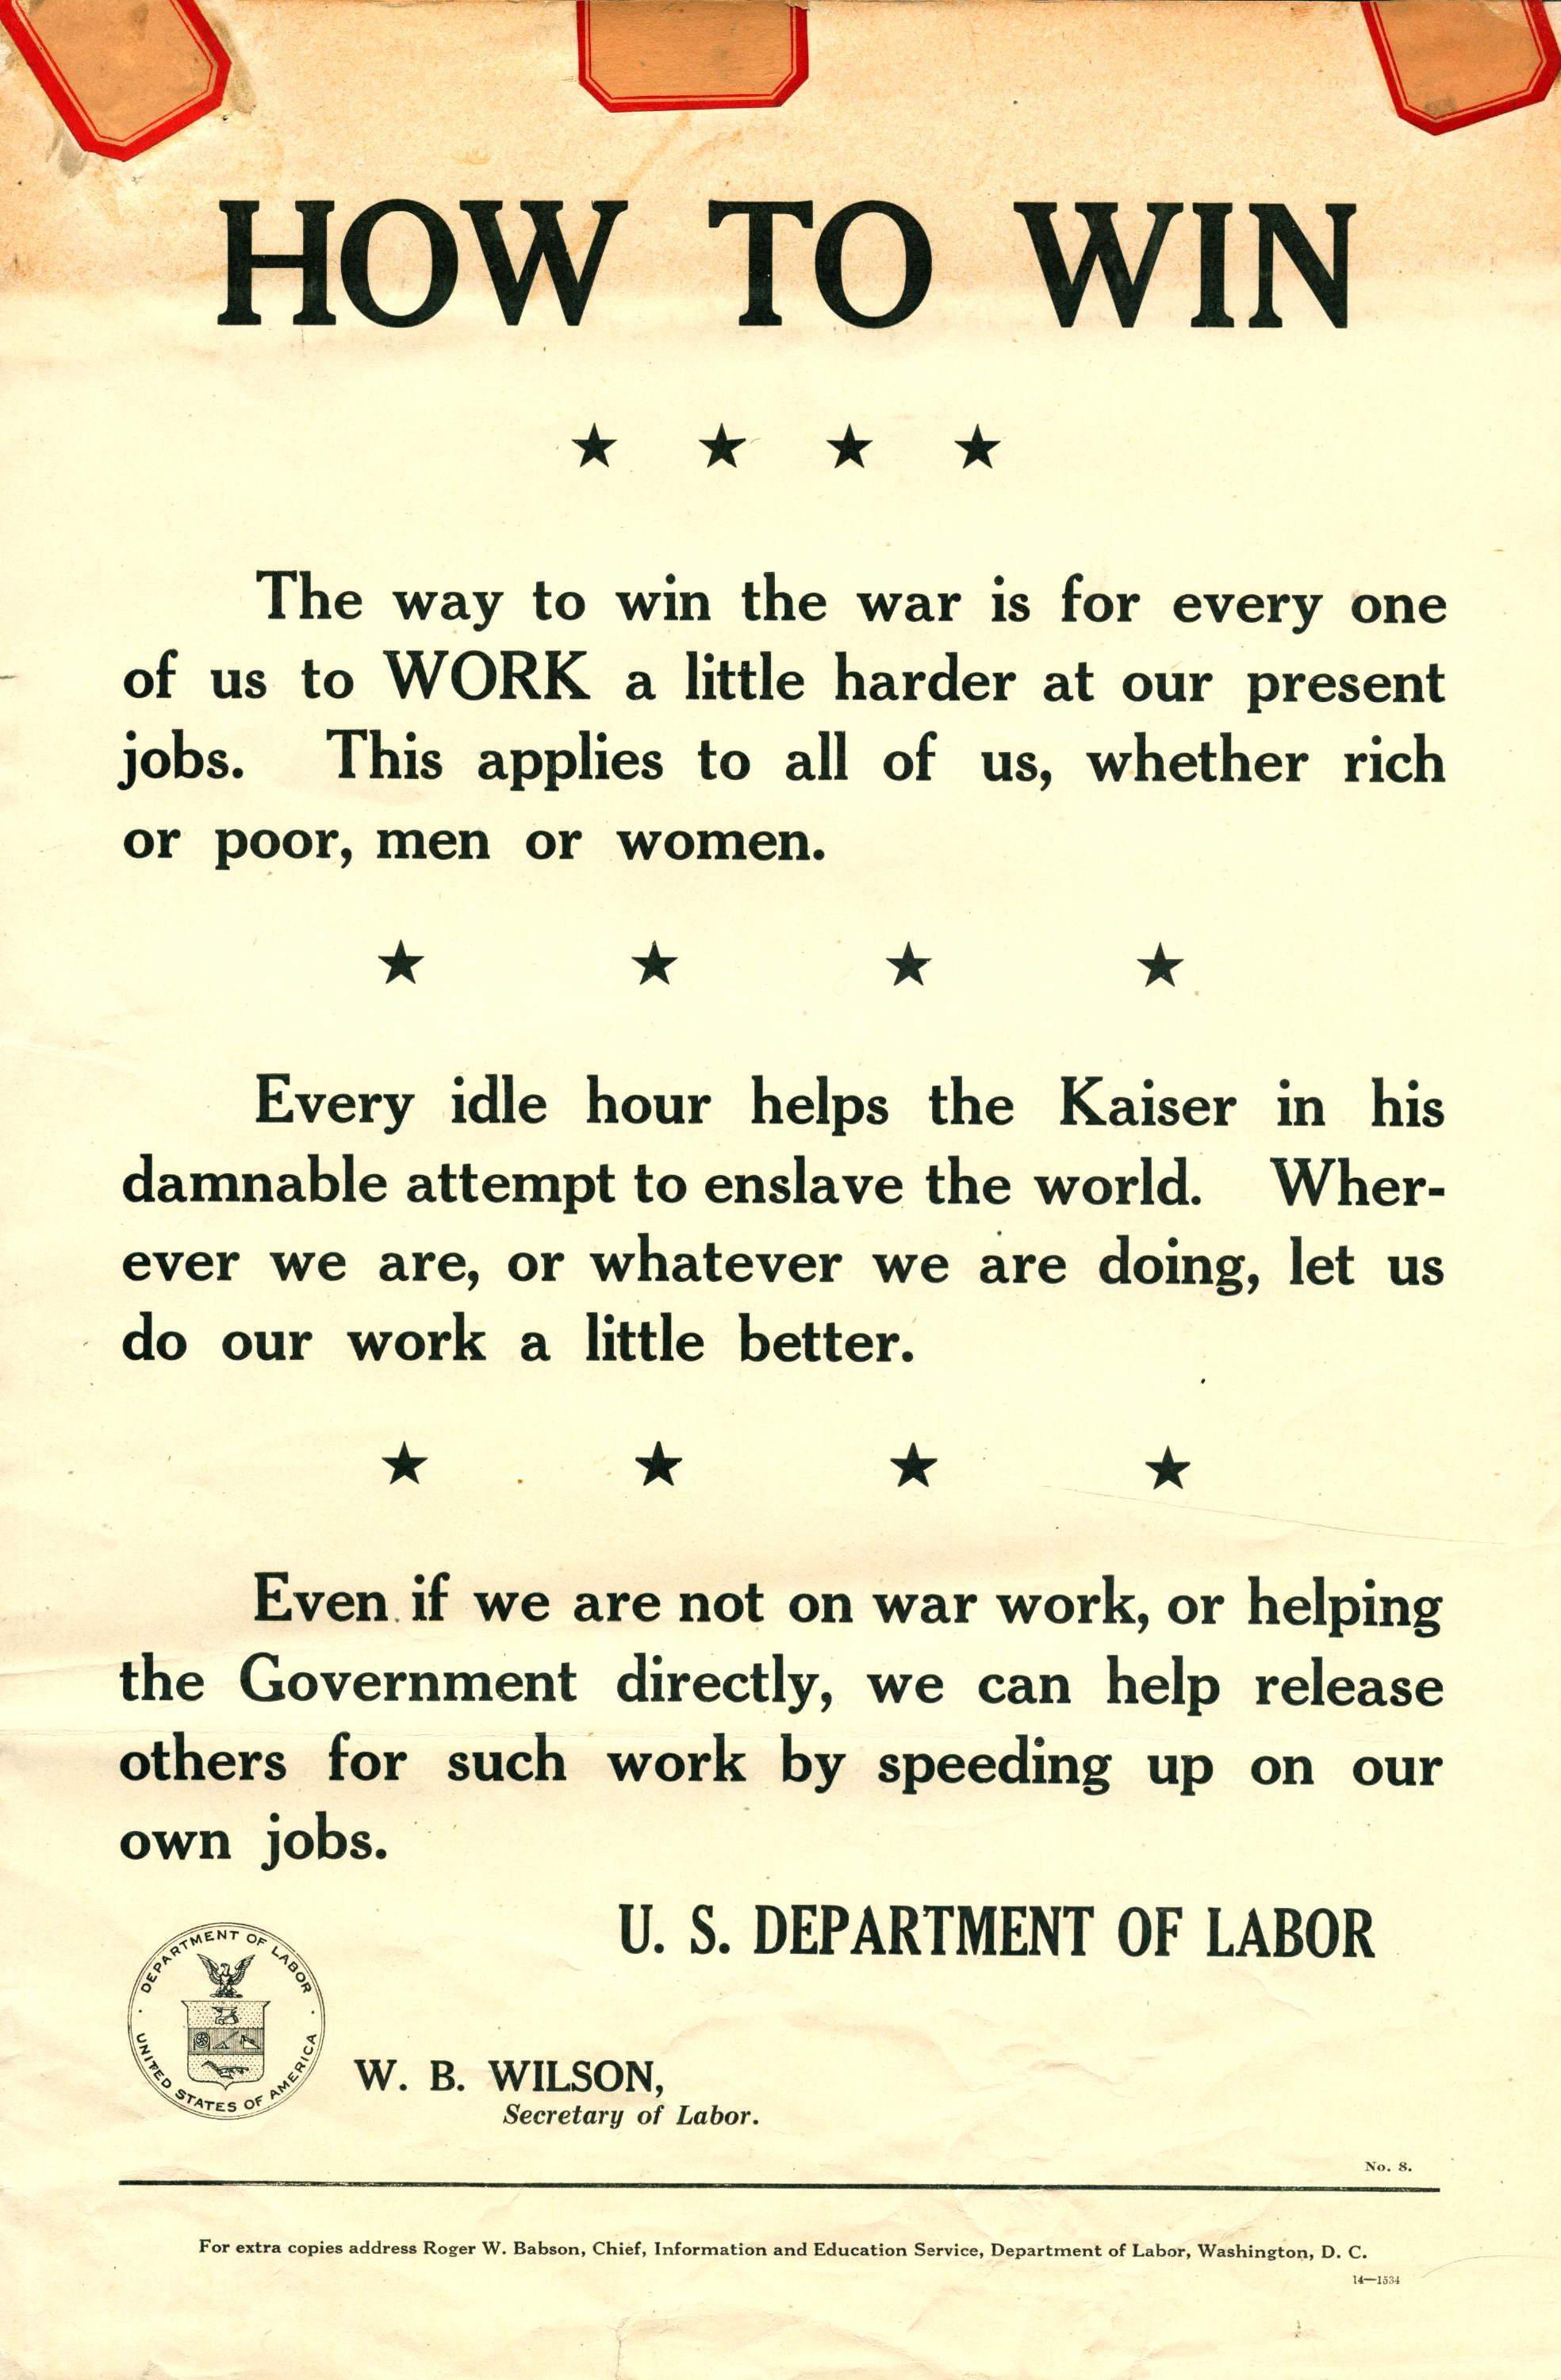 Motivational broadside for war workers, produced during World War 1